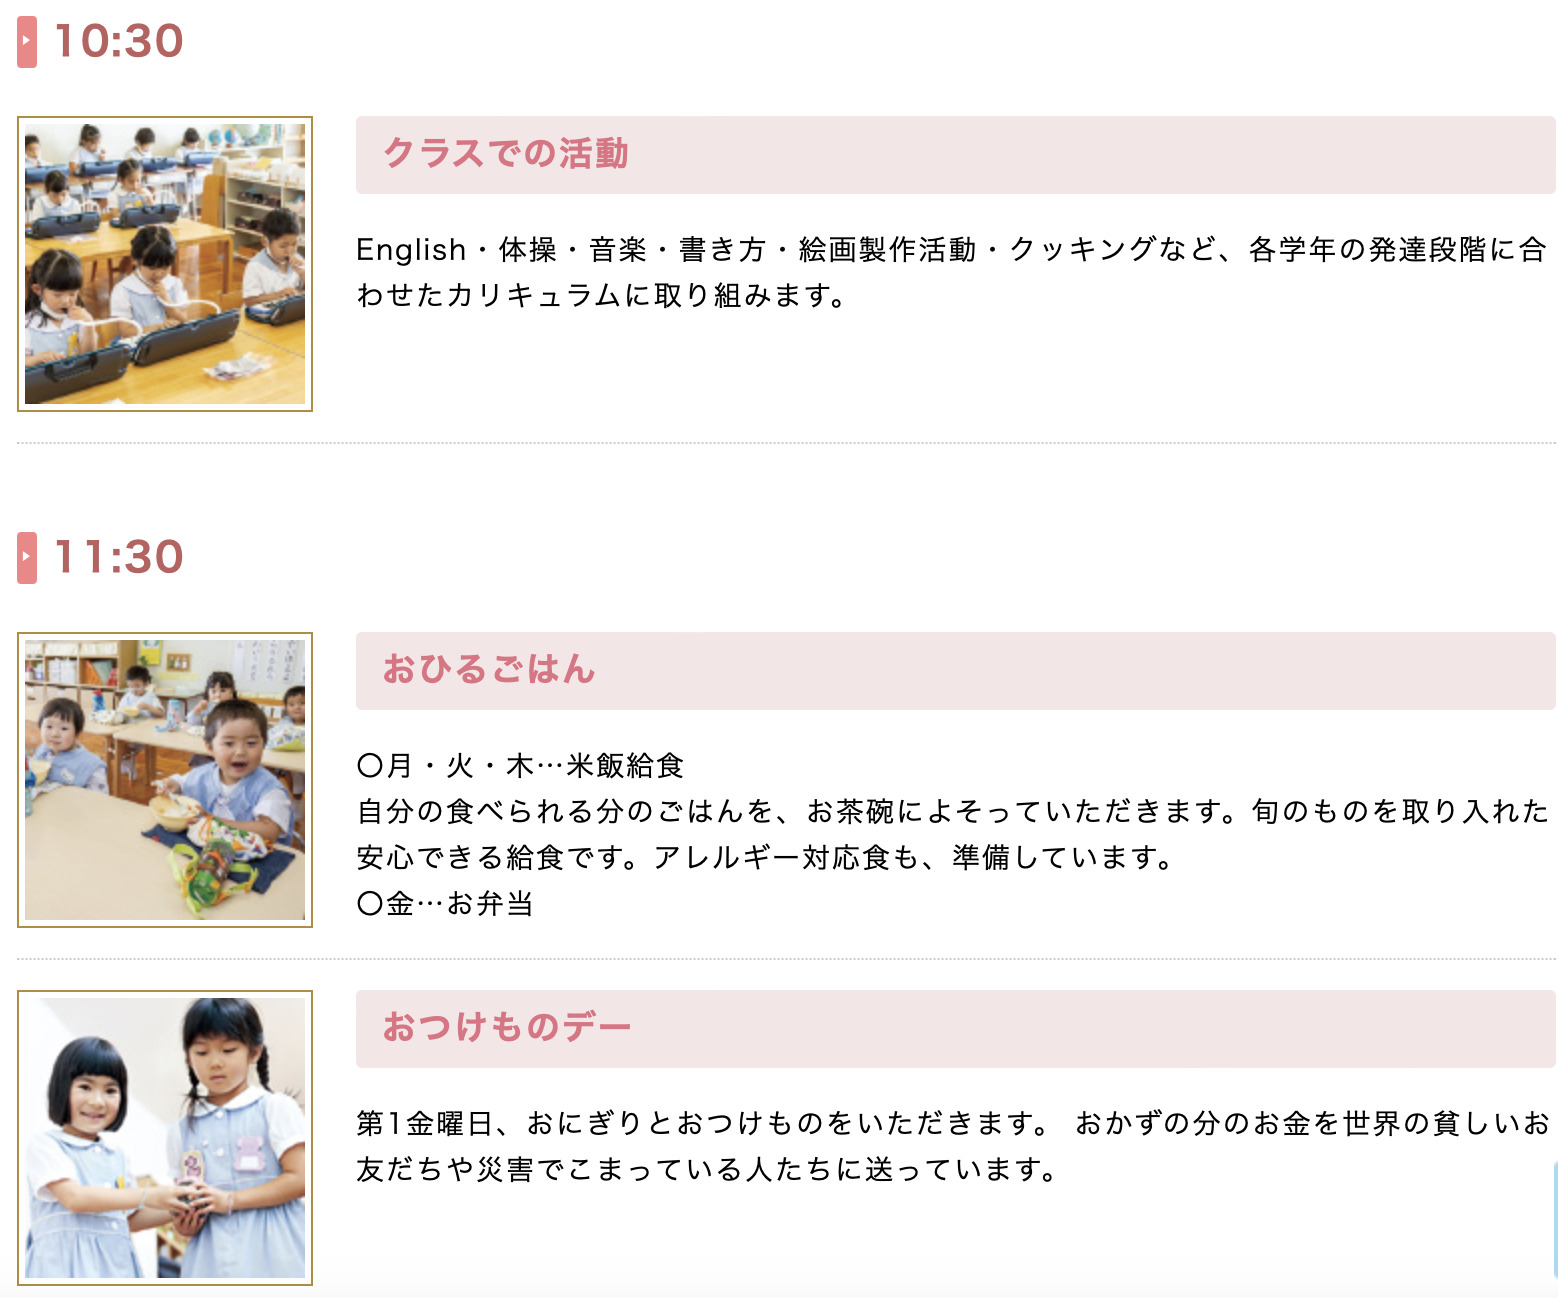 sakai-kenmei-kindergarten